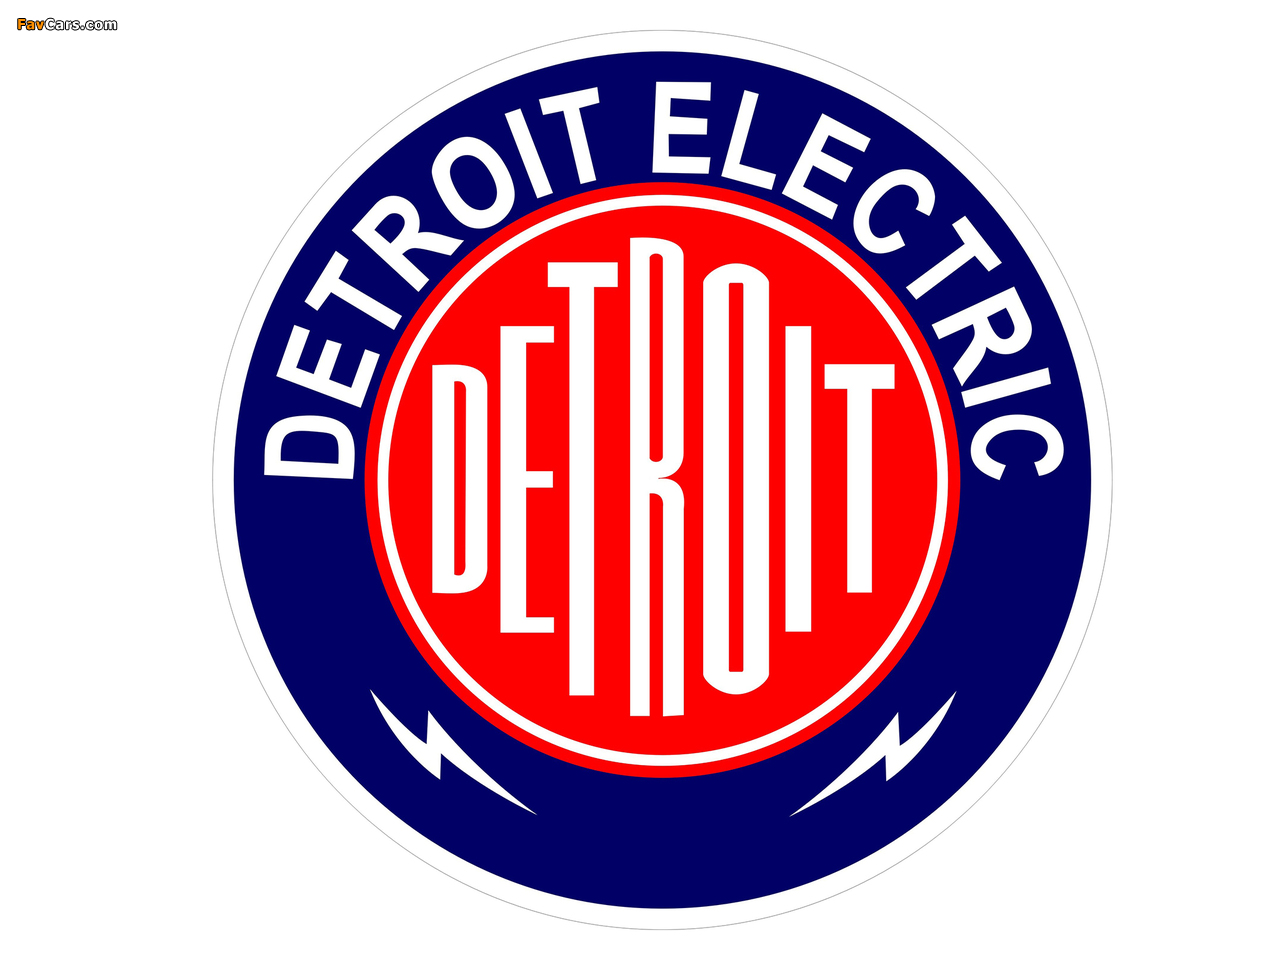 Detroit Electric pictures (1280 x 960)